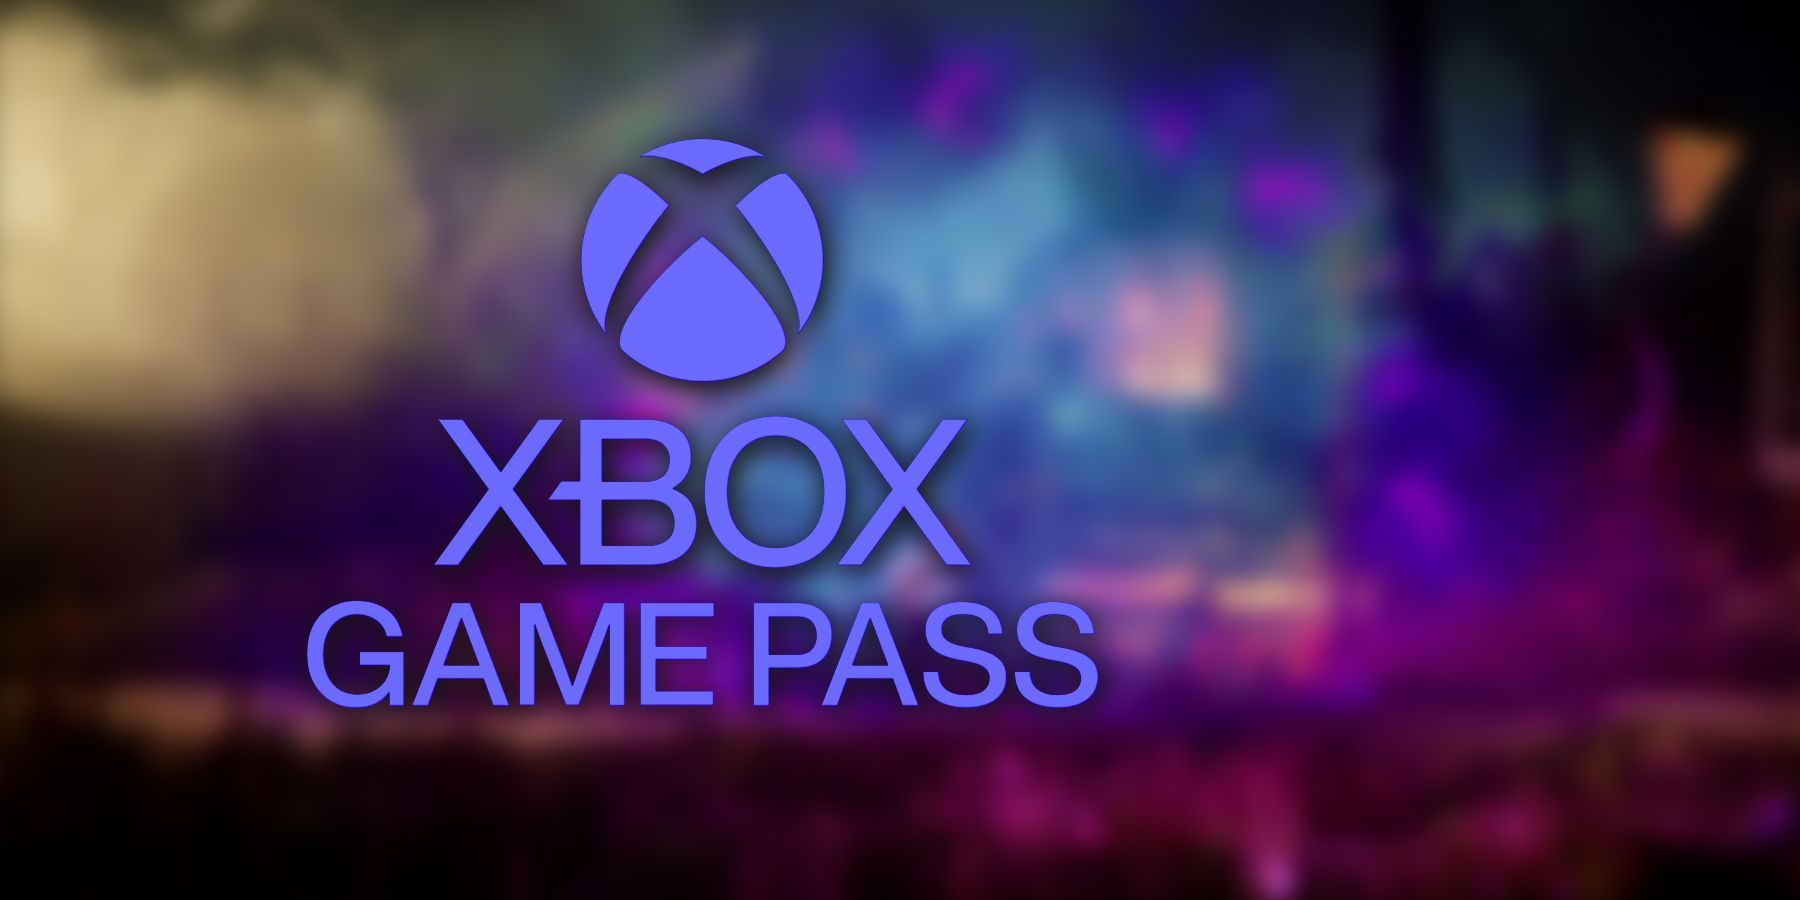 last case of benedict fox blurred xbox game pass logo